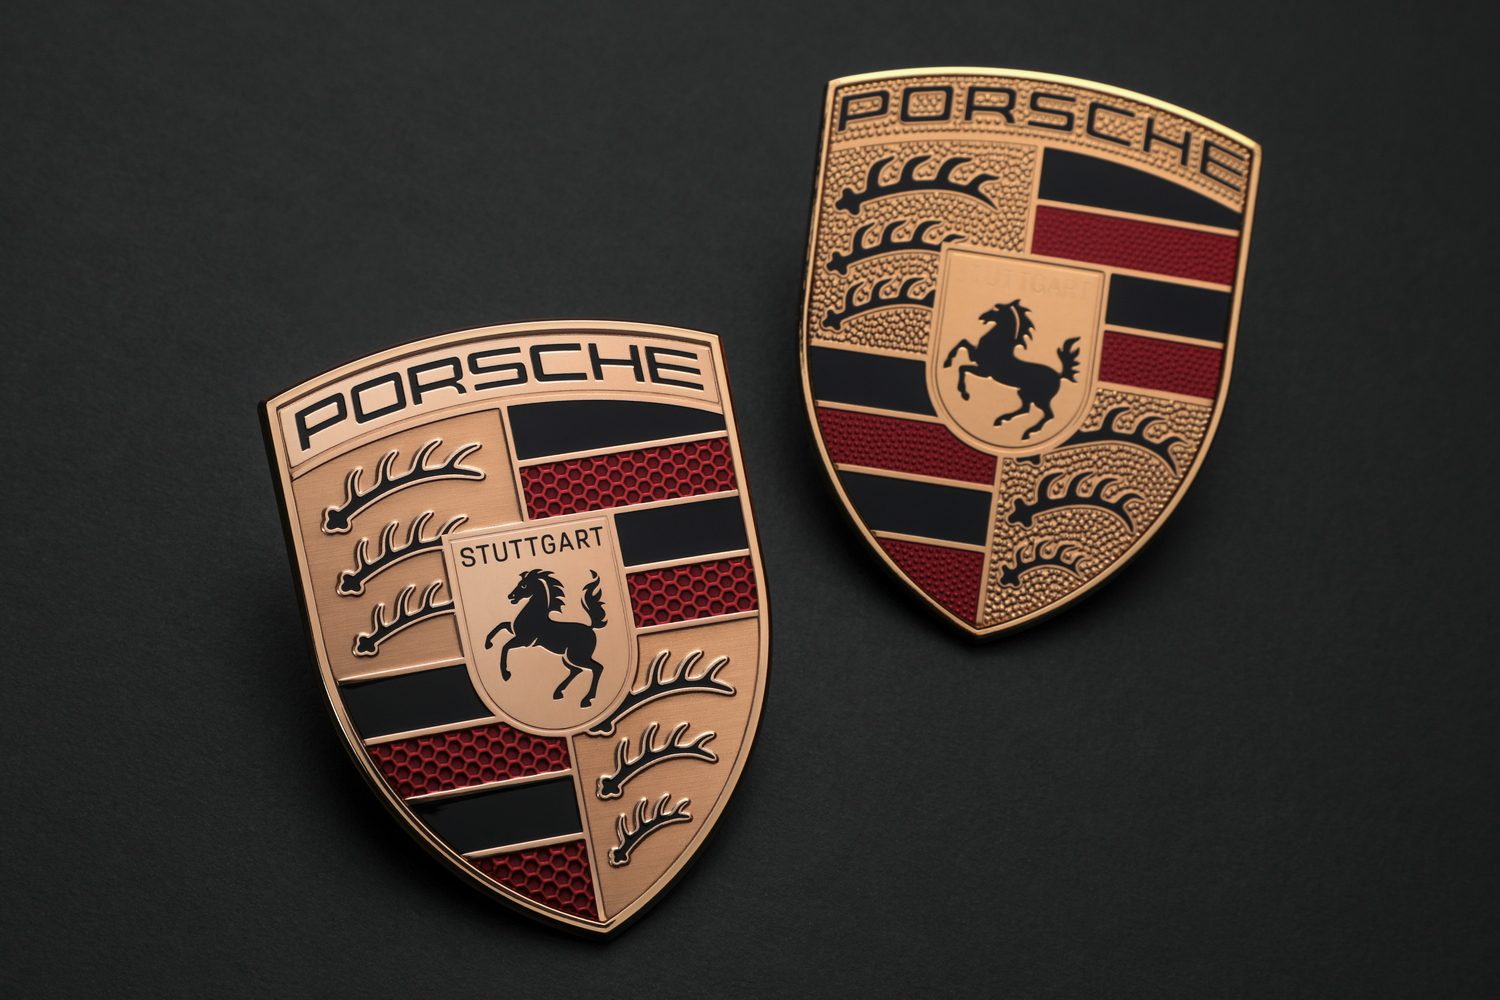 Porsche updates its badge